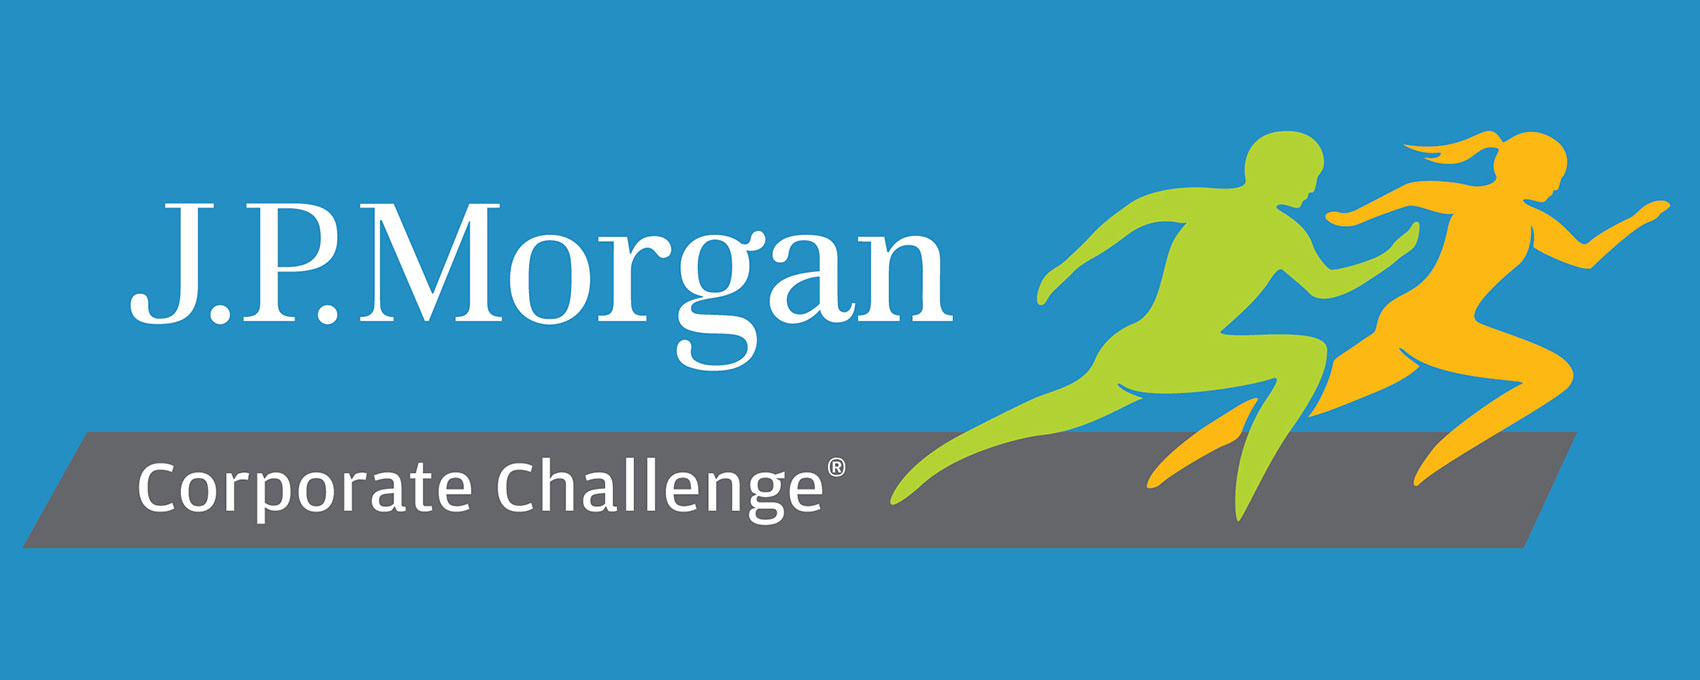 J.P. Morgan Corporate Challenge Logo